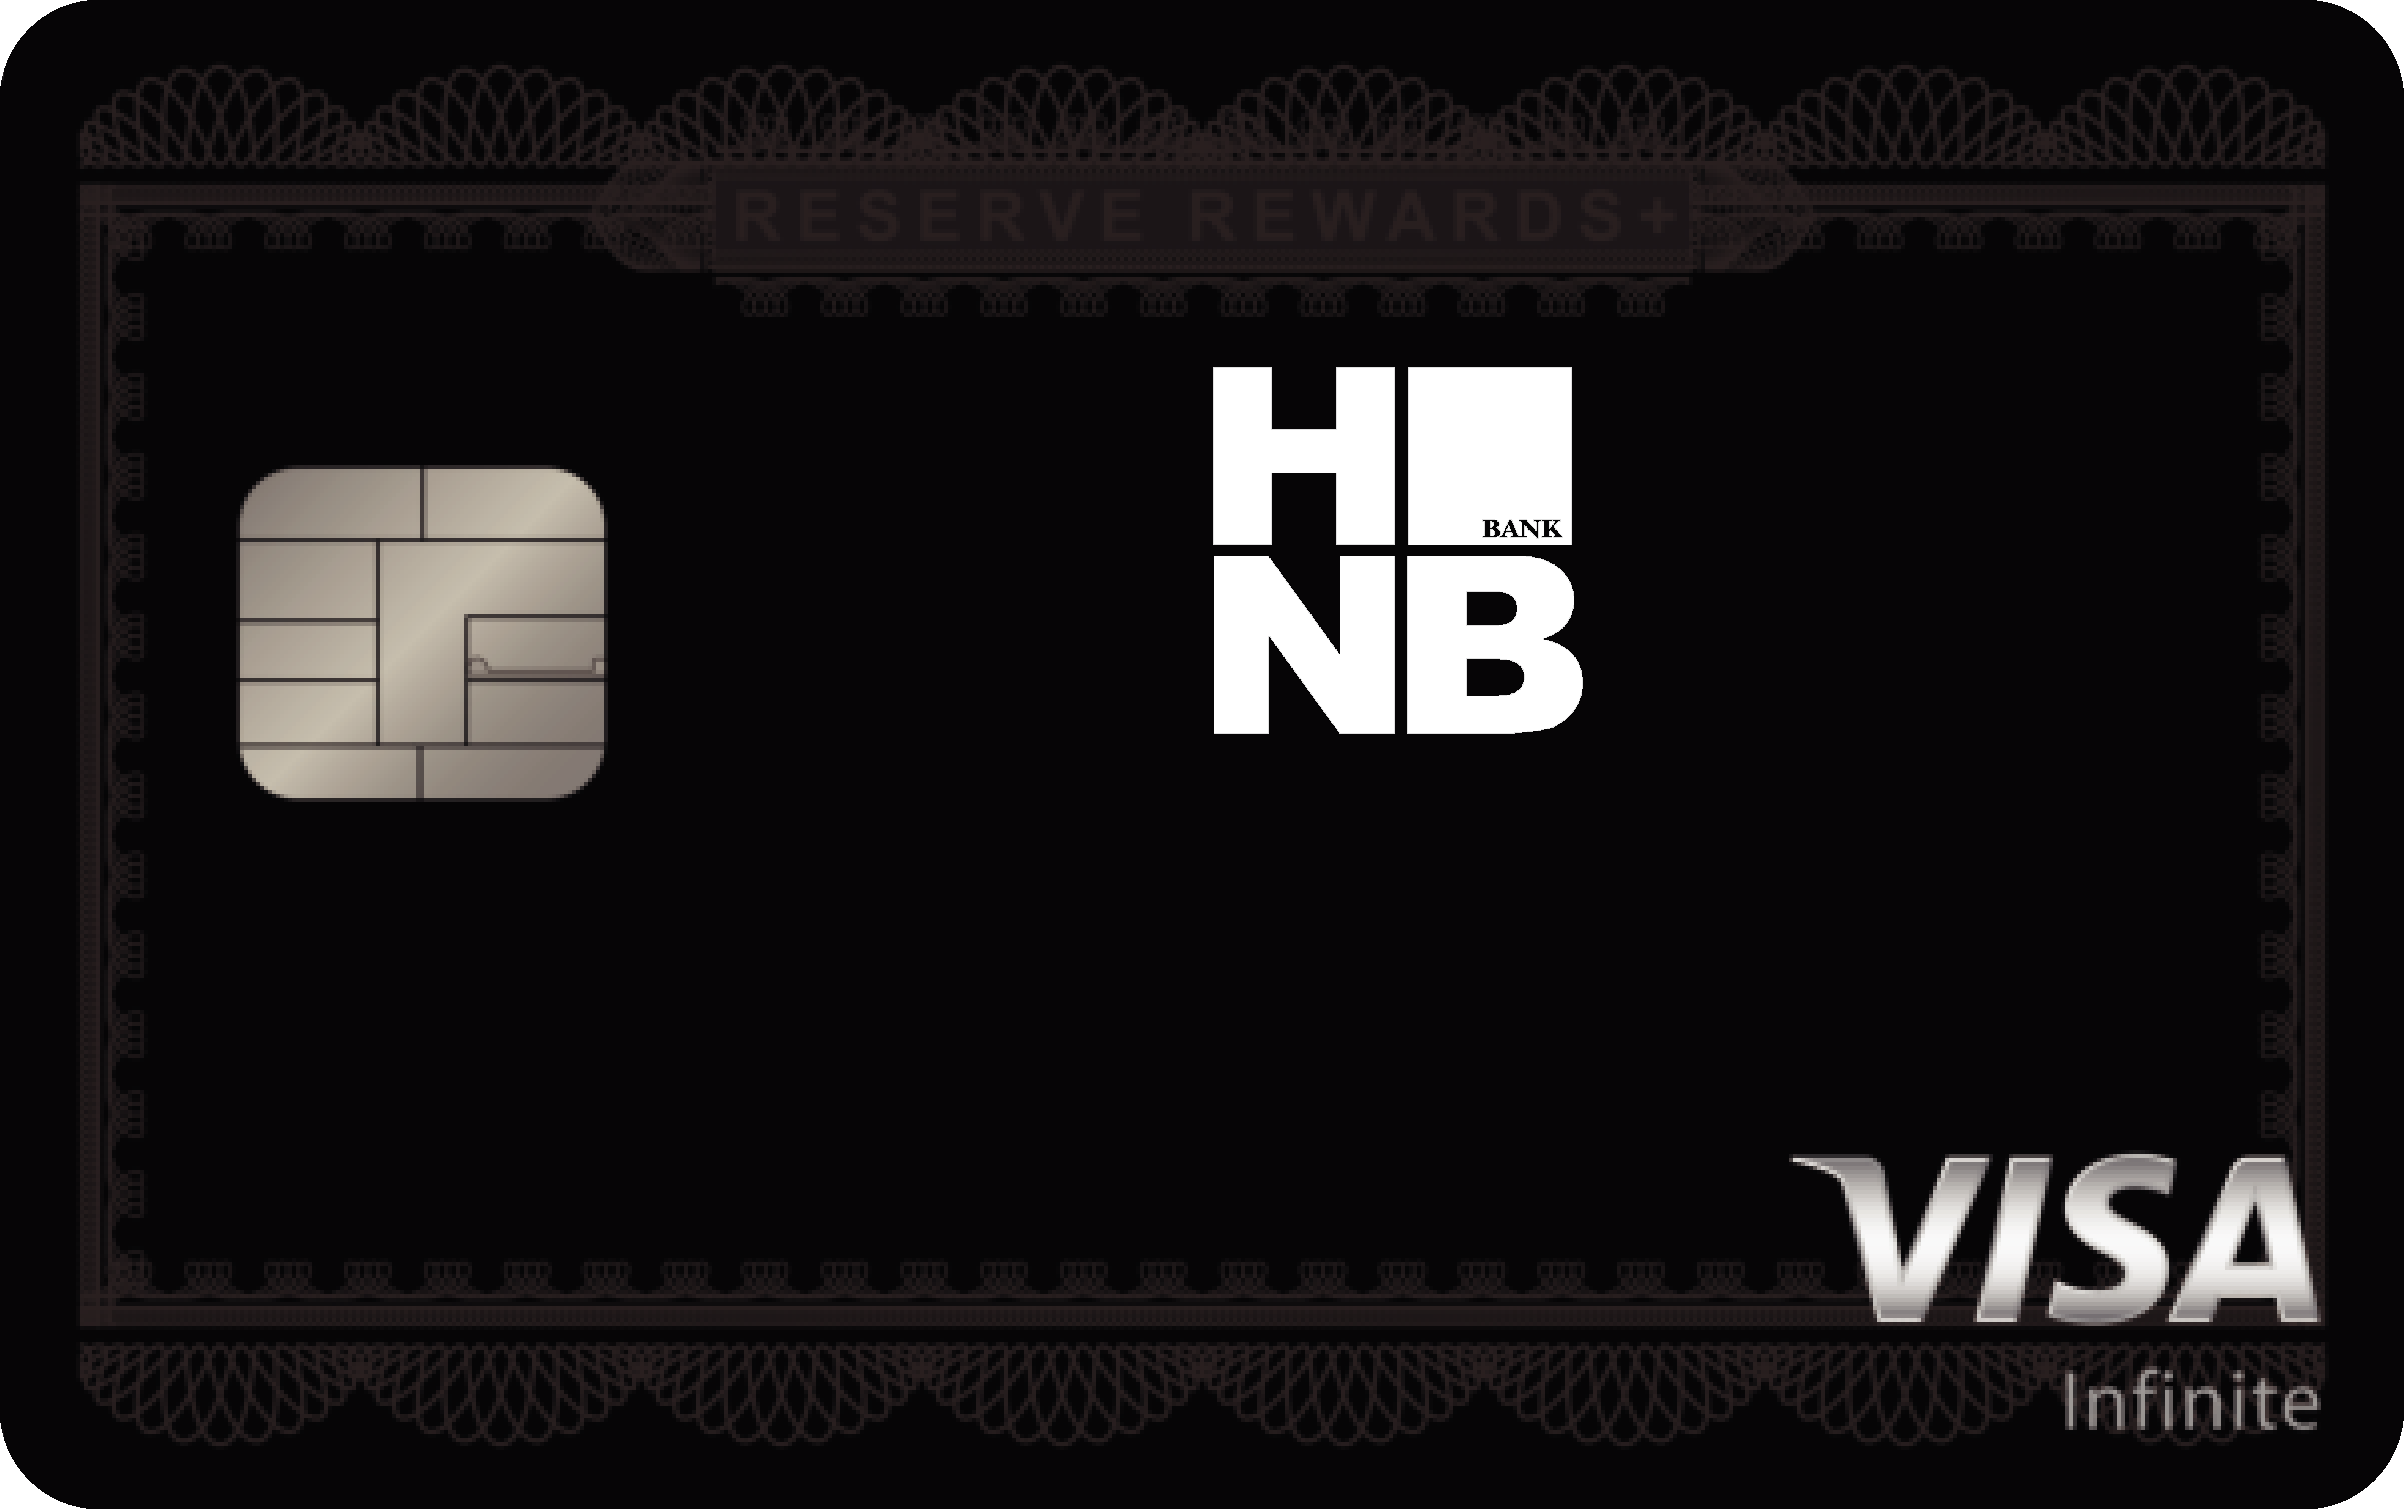 HNB National Bank